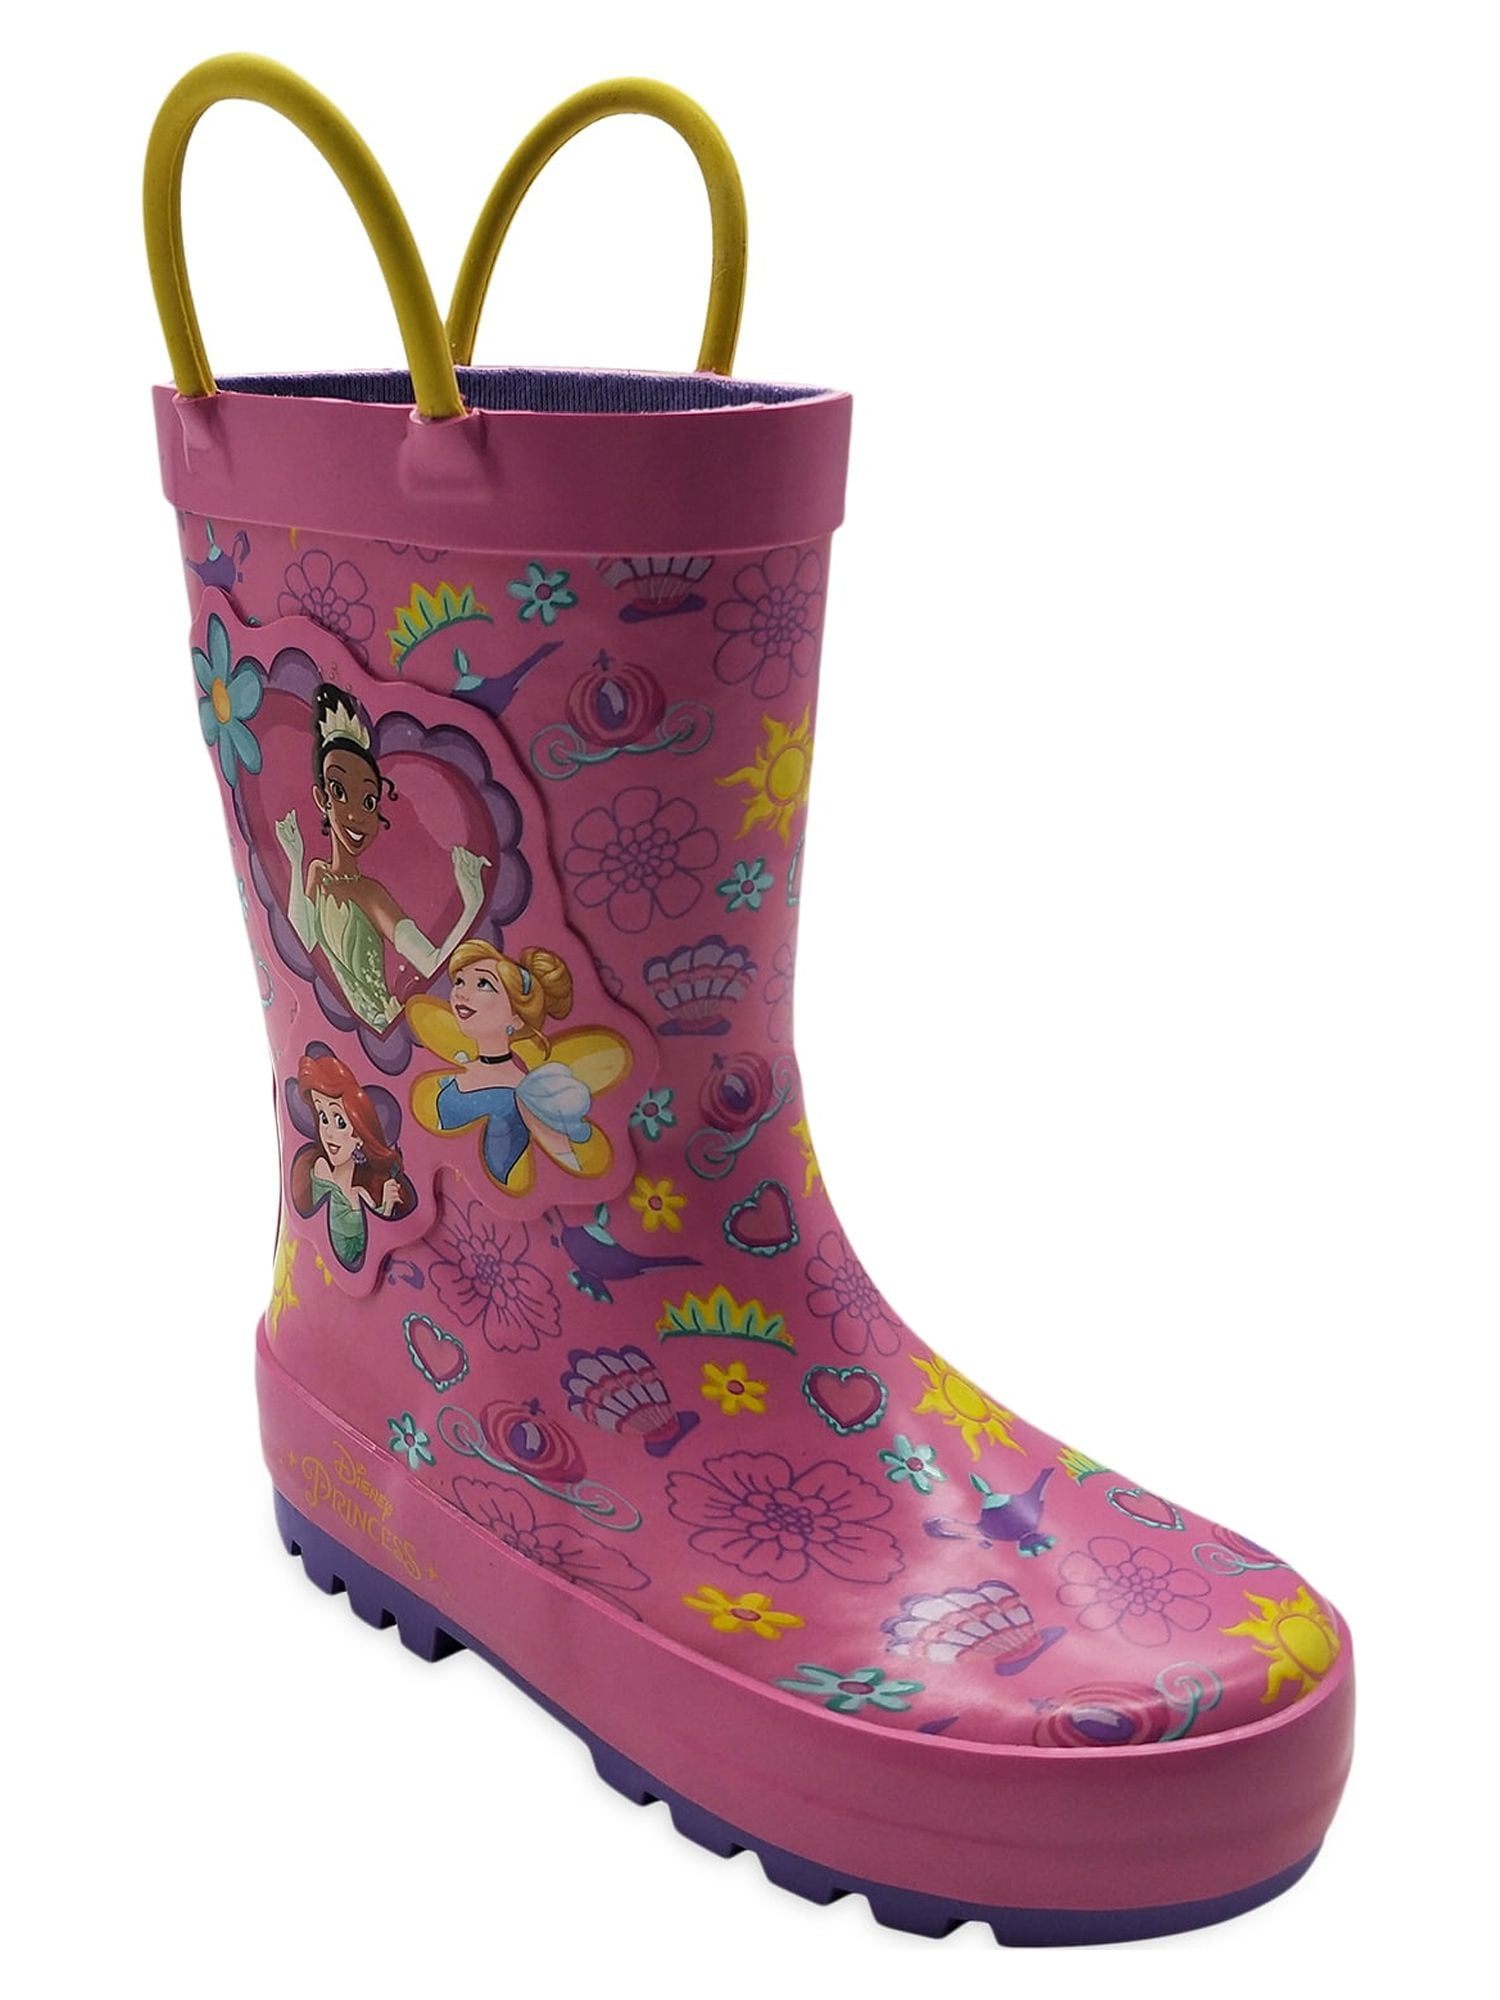 Disney Princesses Rain Boot (Toddler Girls) - Walmart.com